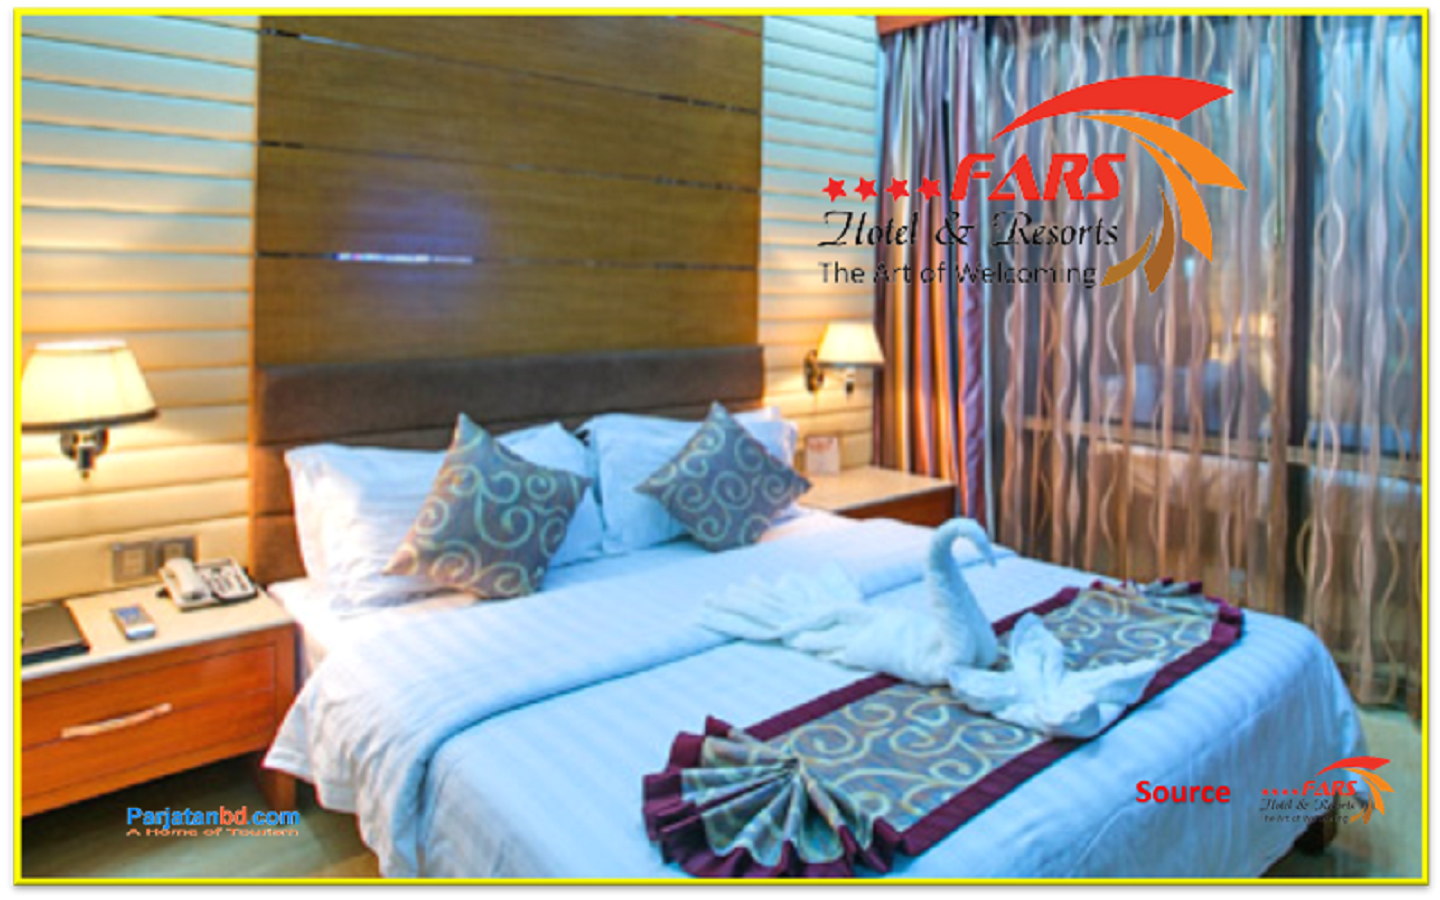 Room Executive Suite -1, FARS Hotel & Resorts, Bijonagar